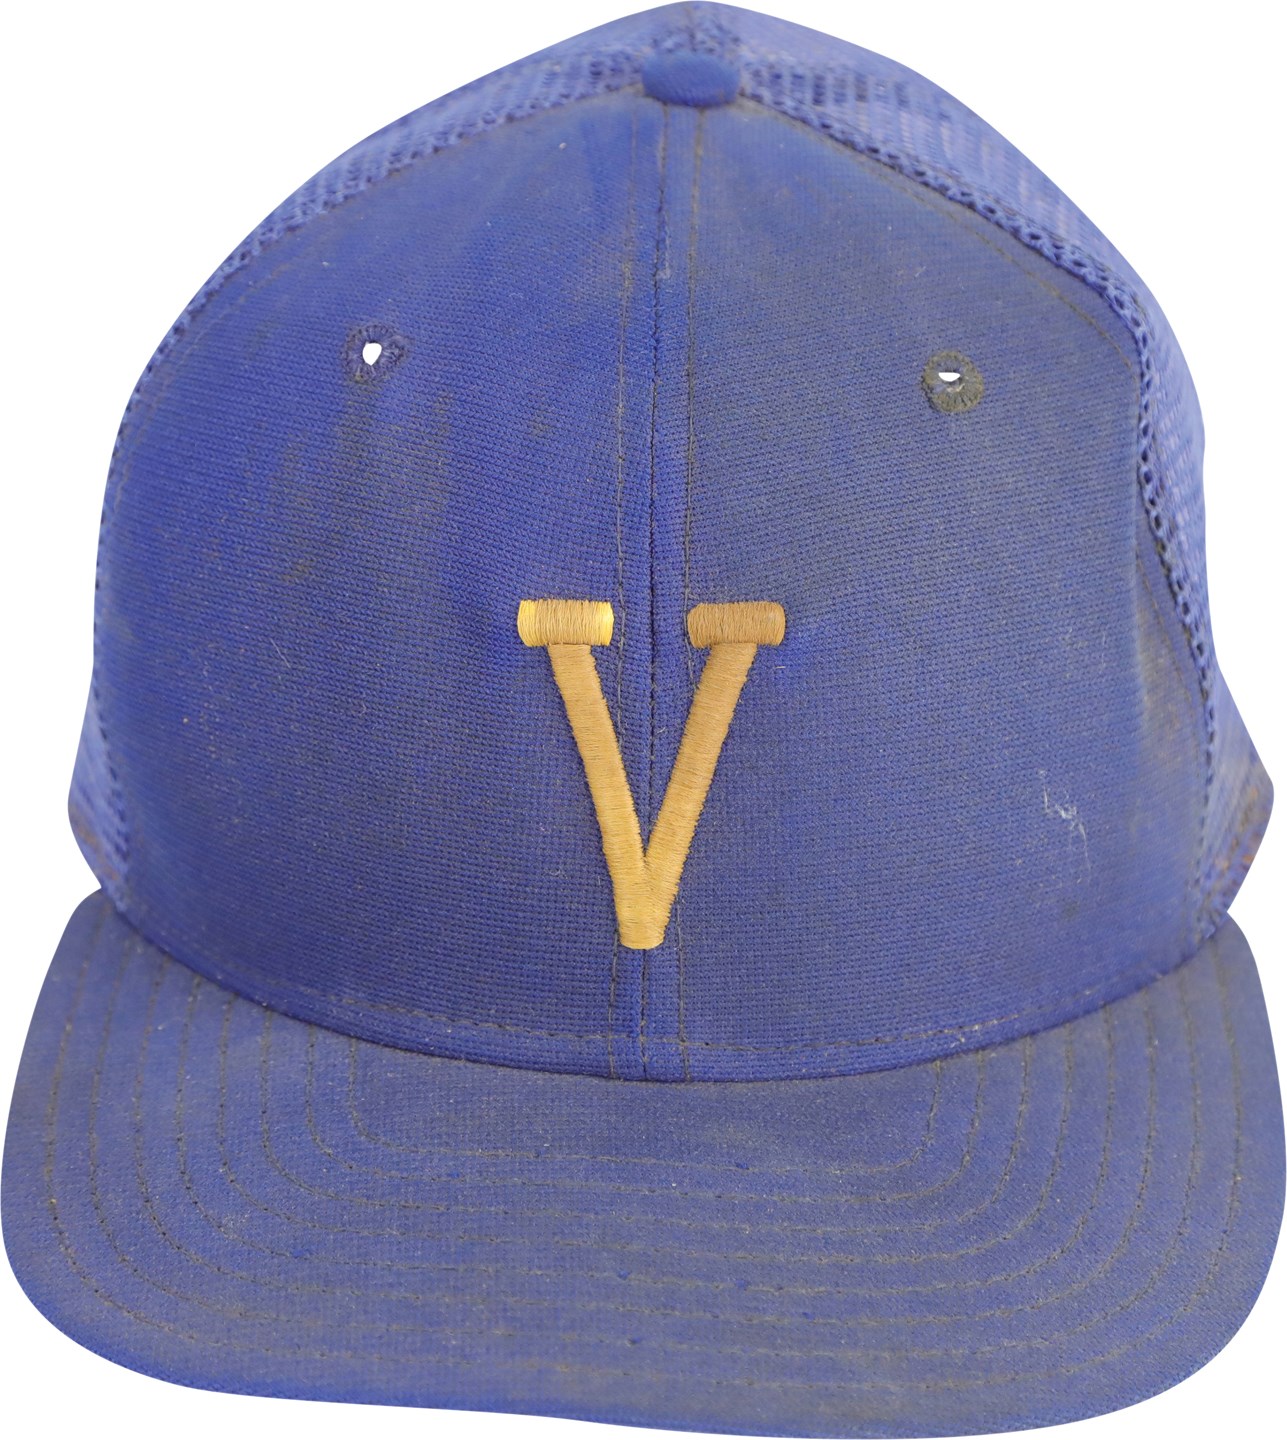 Baseball Equipment - 1988 Omar Vizquel Vermont Mariners Minor League Game Used Hat